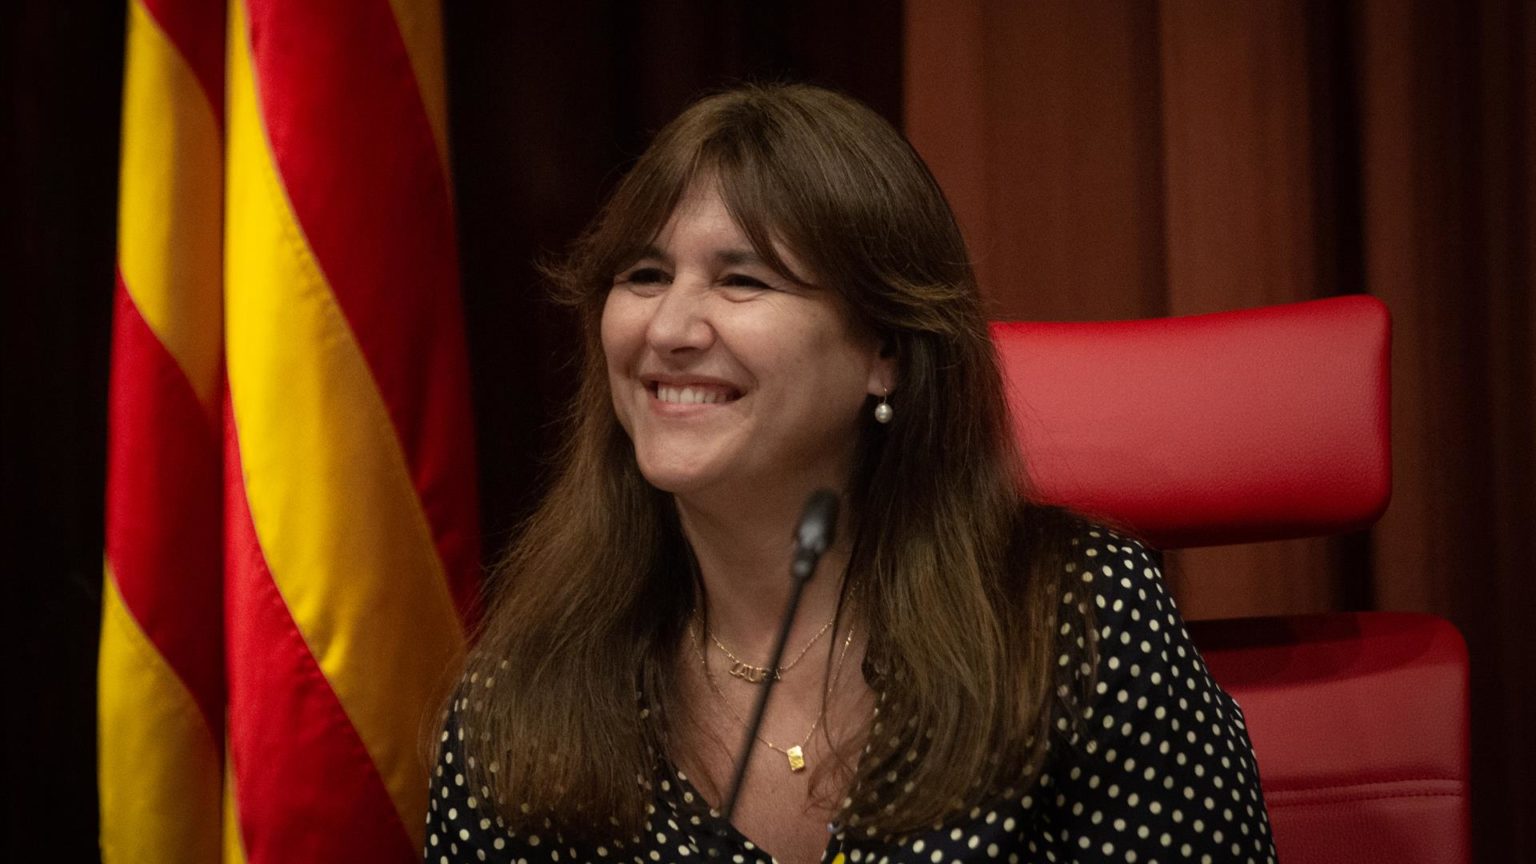 Laura Borràs preside una cumbre contra la corrupción a pesar de estar imputada